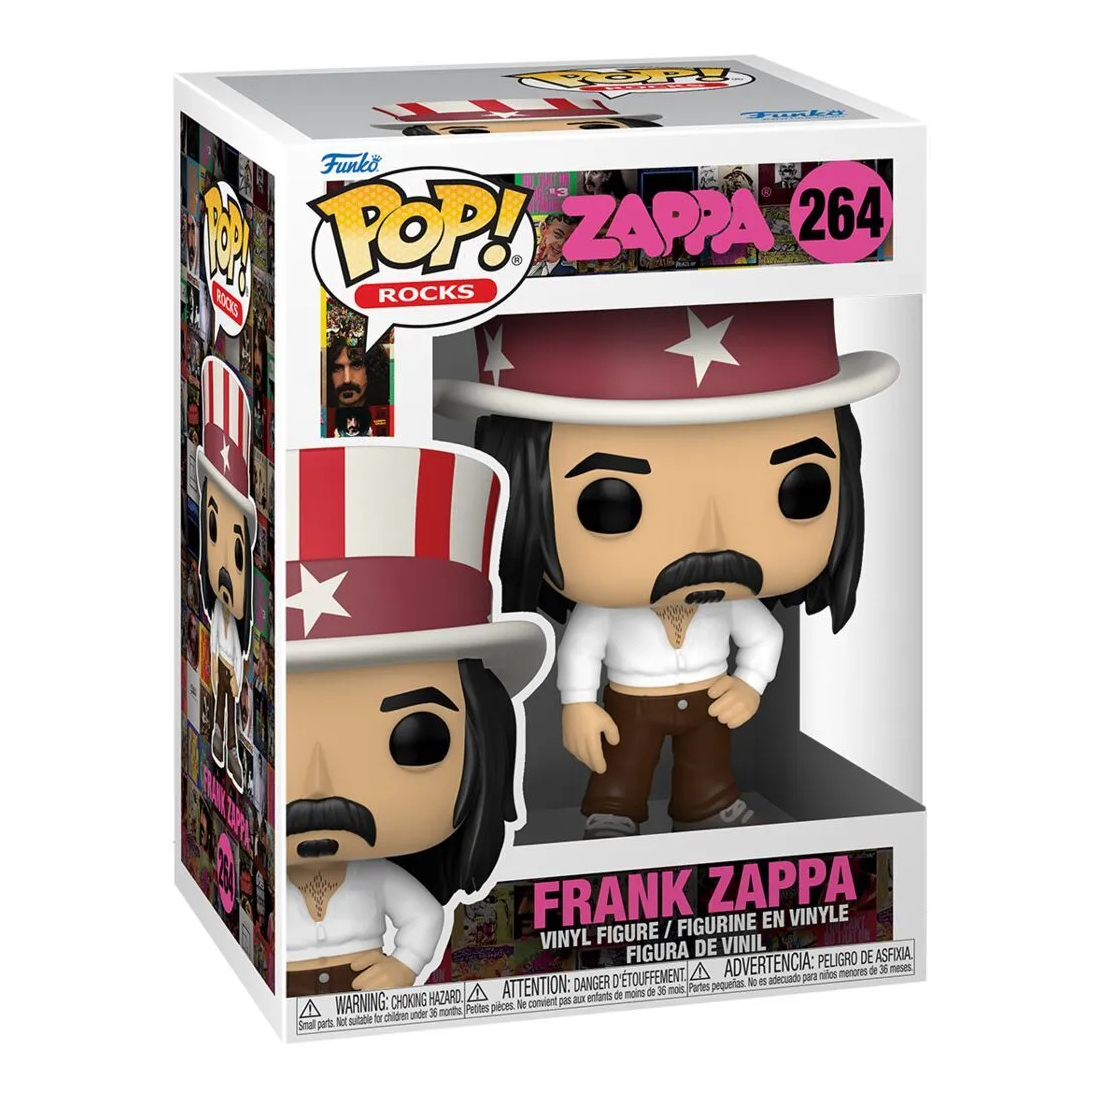 Фигурка Funko Pop! Rocks Frank Zappa фигурка funko pop rocks iron maiden live after death eddie 249 57608